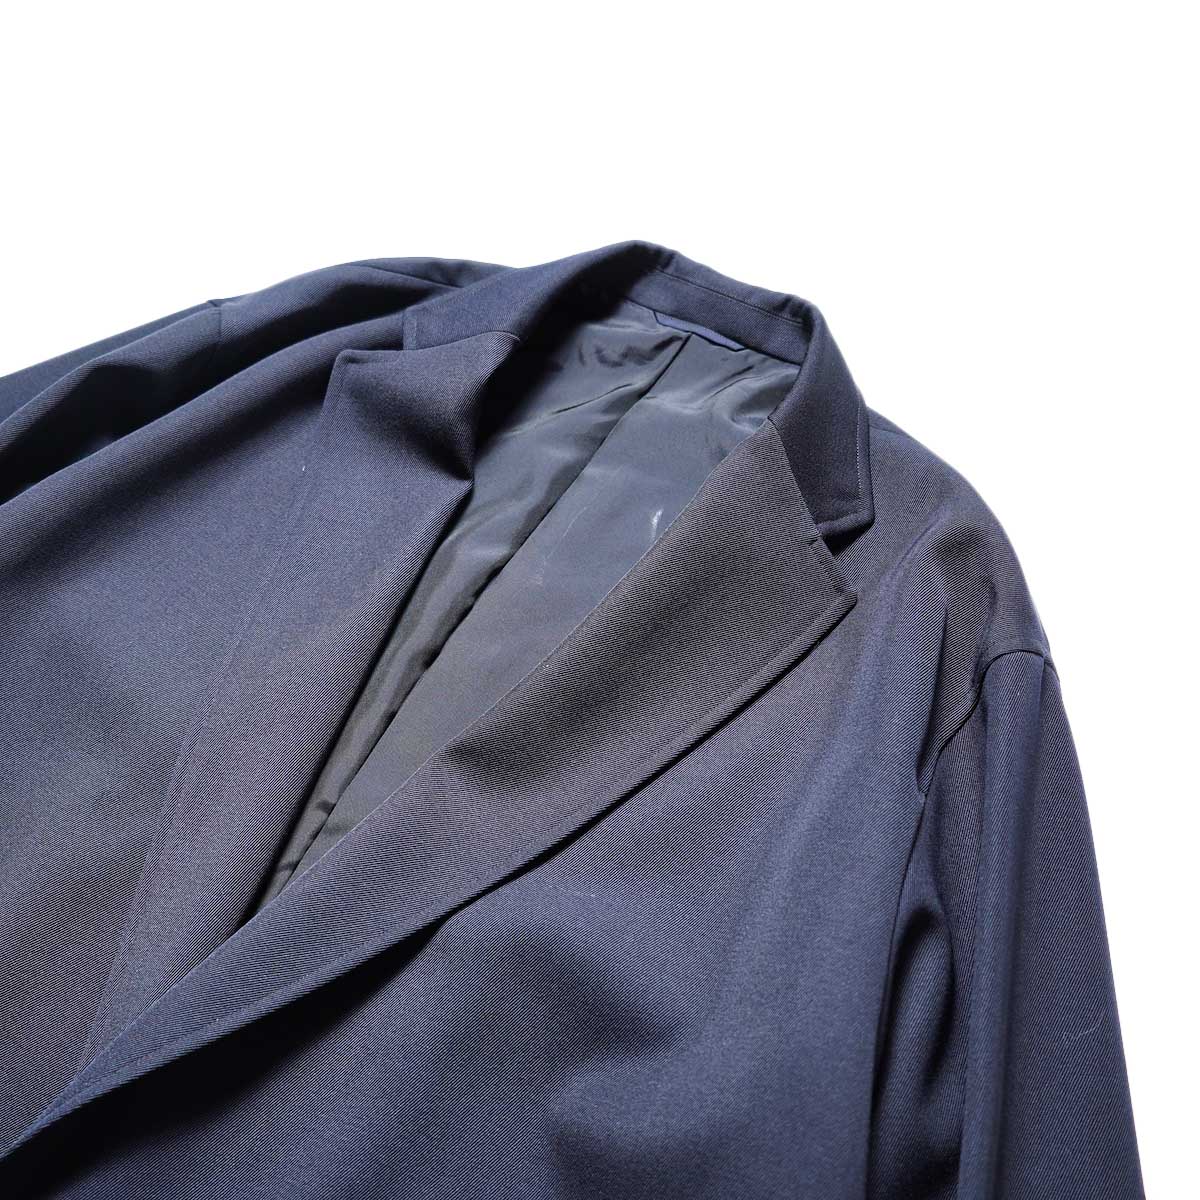 blurhms / Wool Surge Cardigan Jacket (Dark Navy)ノッチドラペル